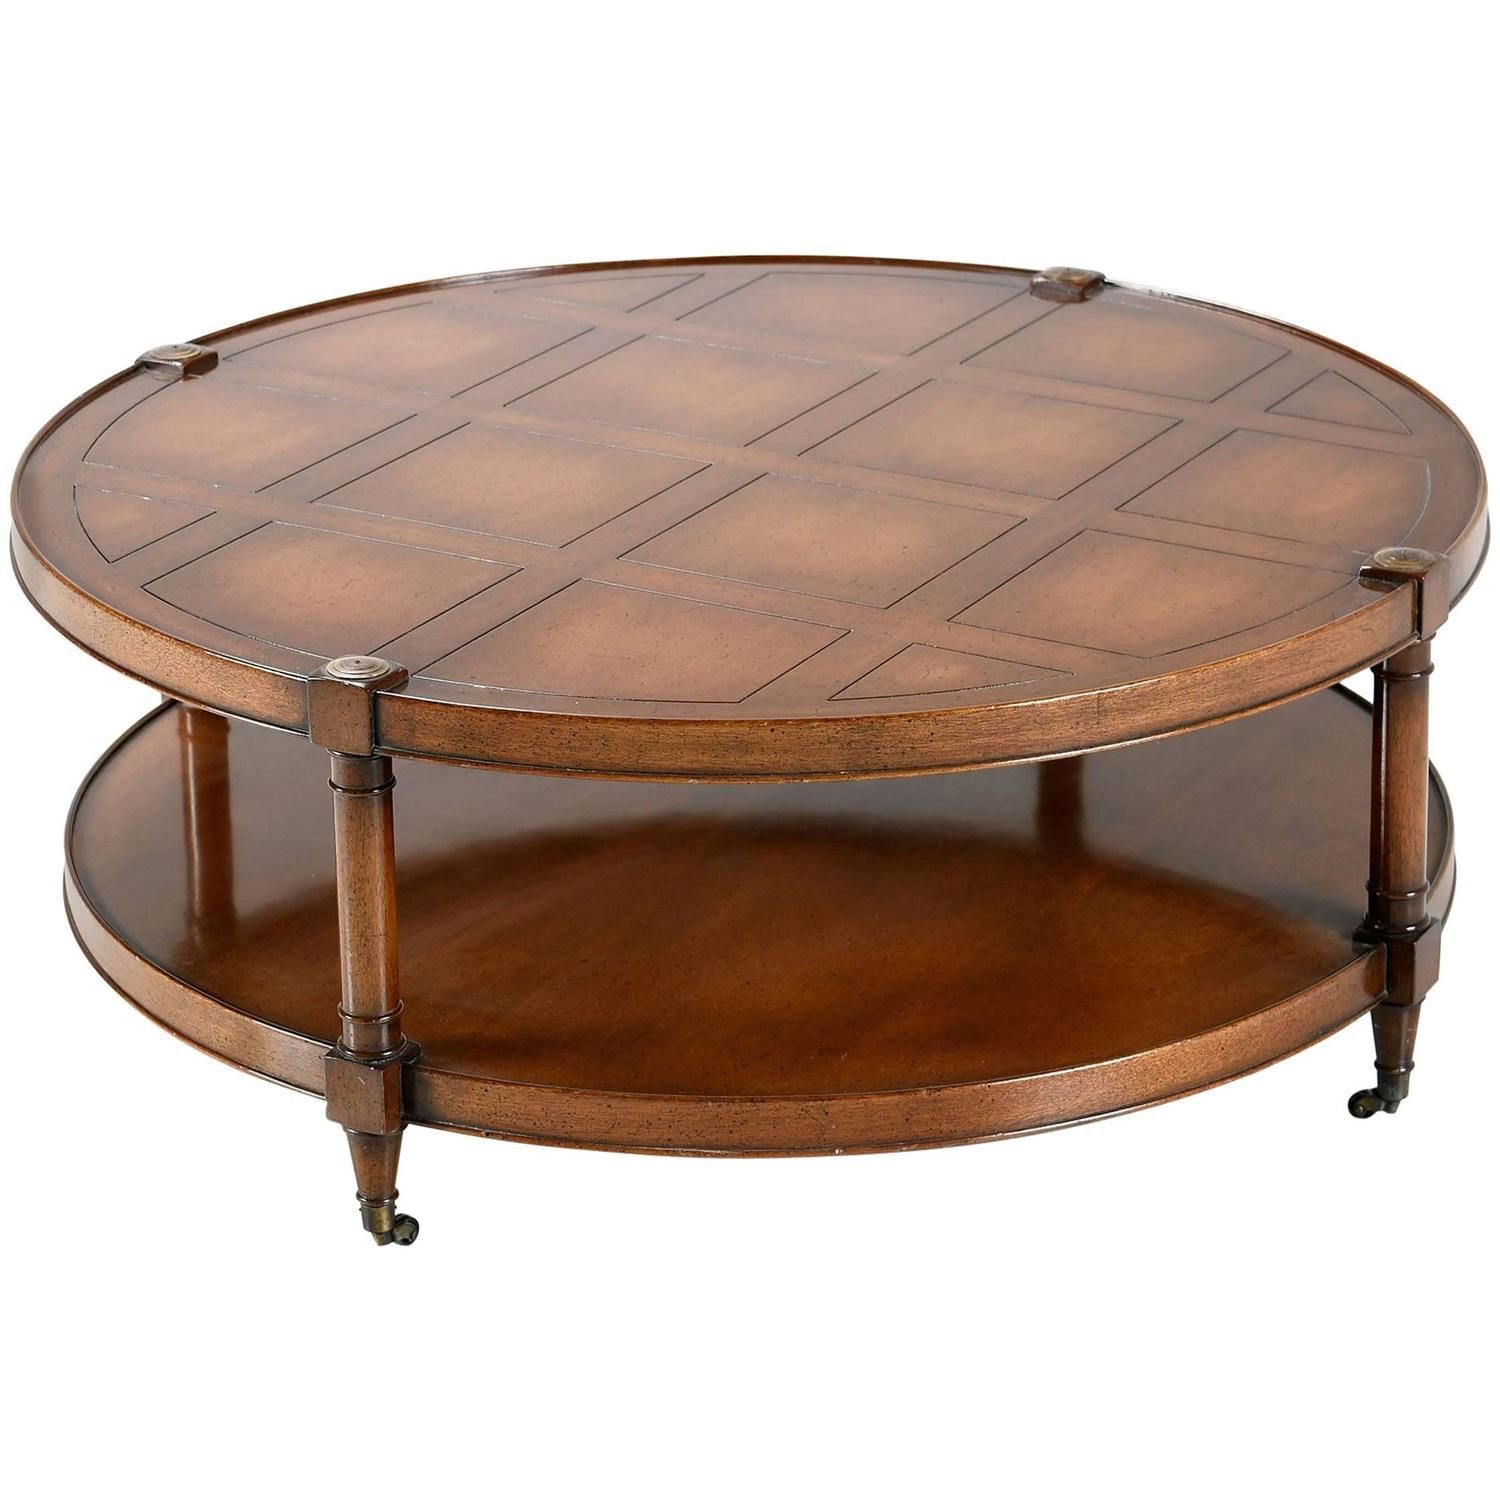 Heritage Mahogany Round Coffee Table On Casters | Coffee Table Vintage Regarding American Heritage Round Coffee Tables (View 14 of 15)